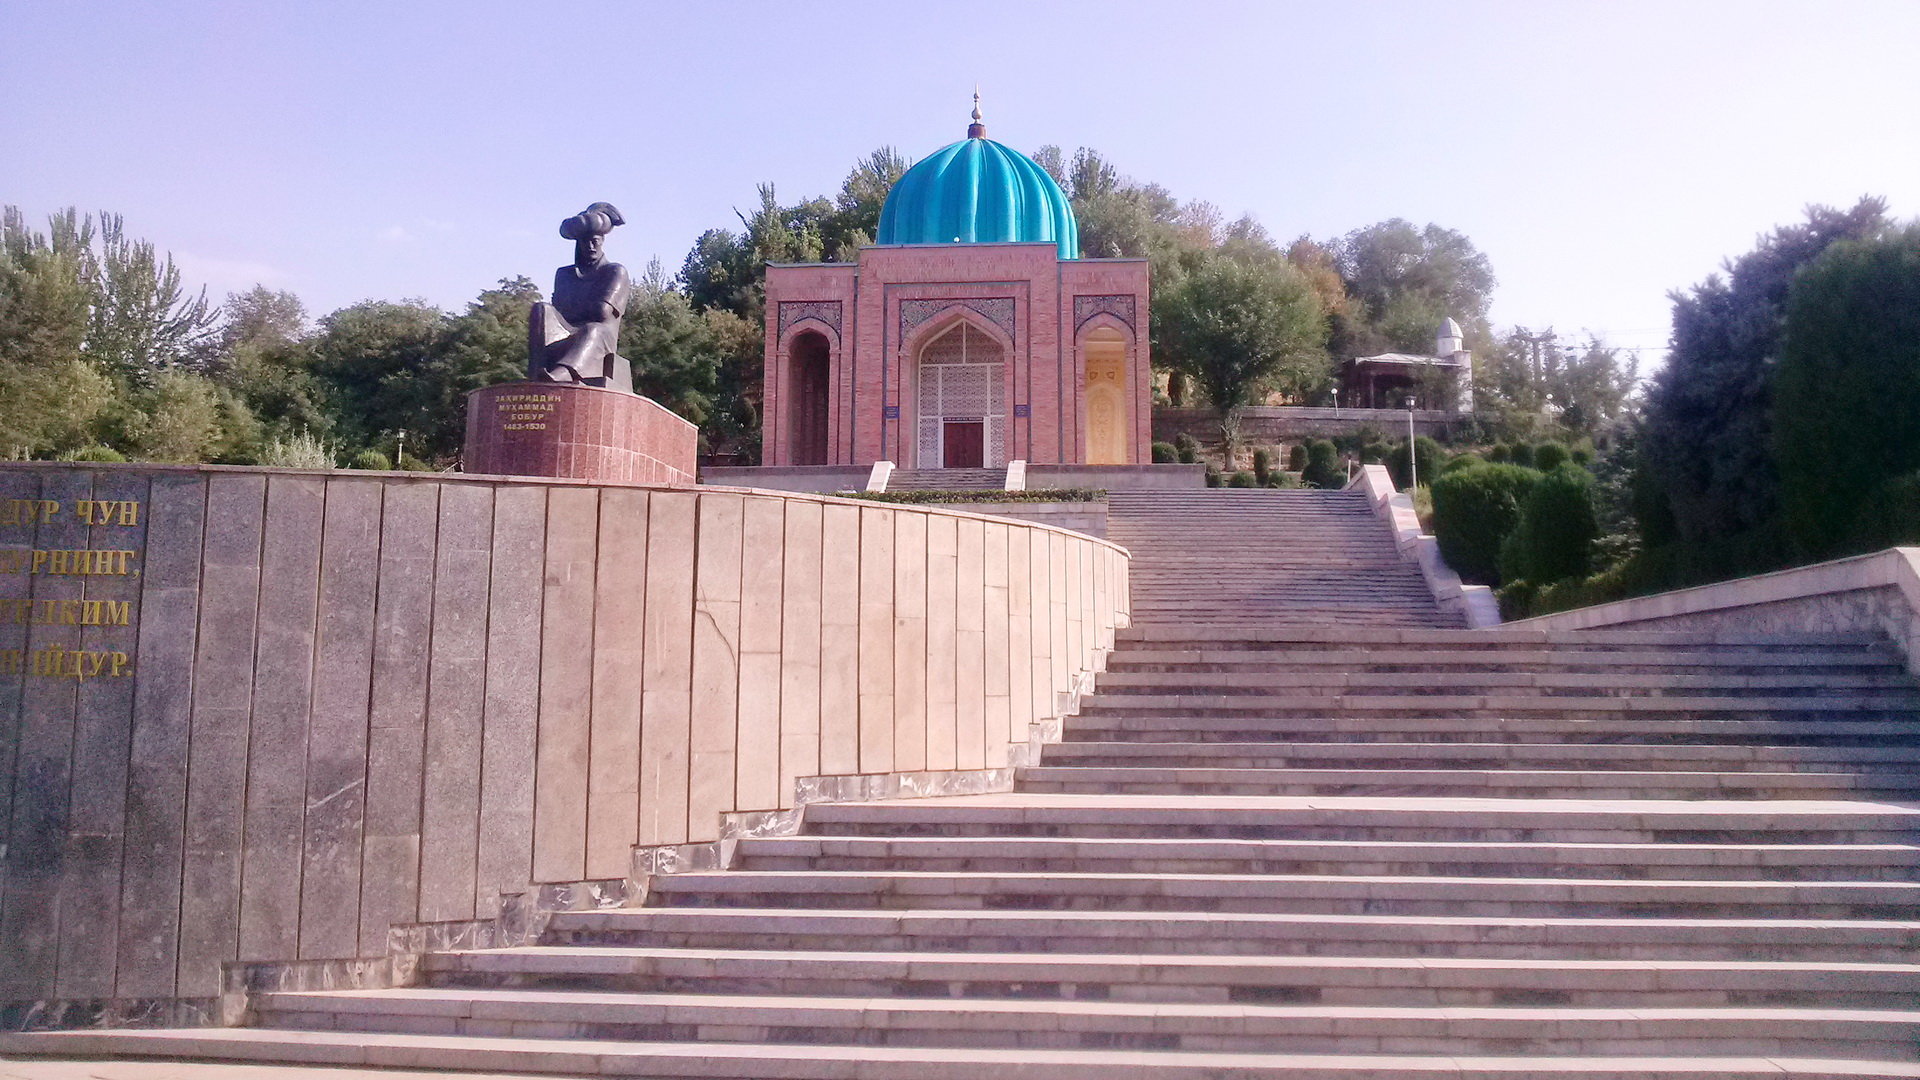 Haus-Museum von Babur, Andijan